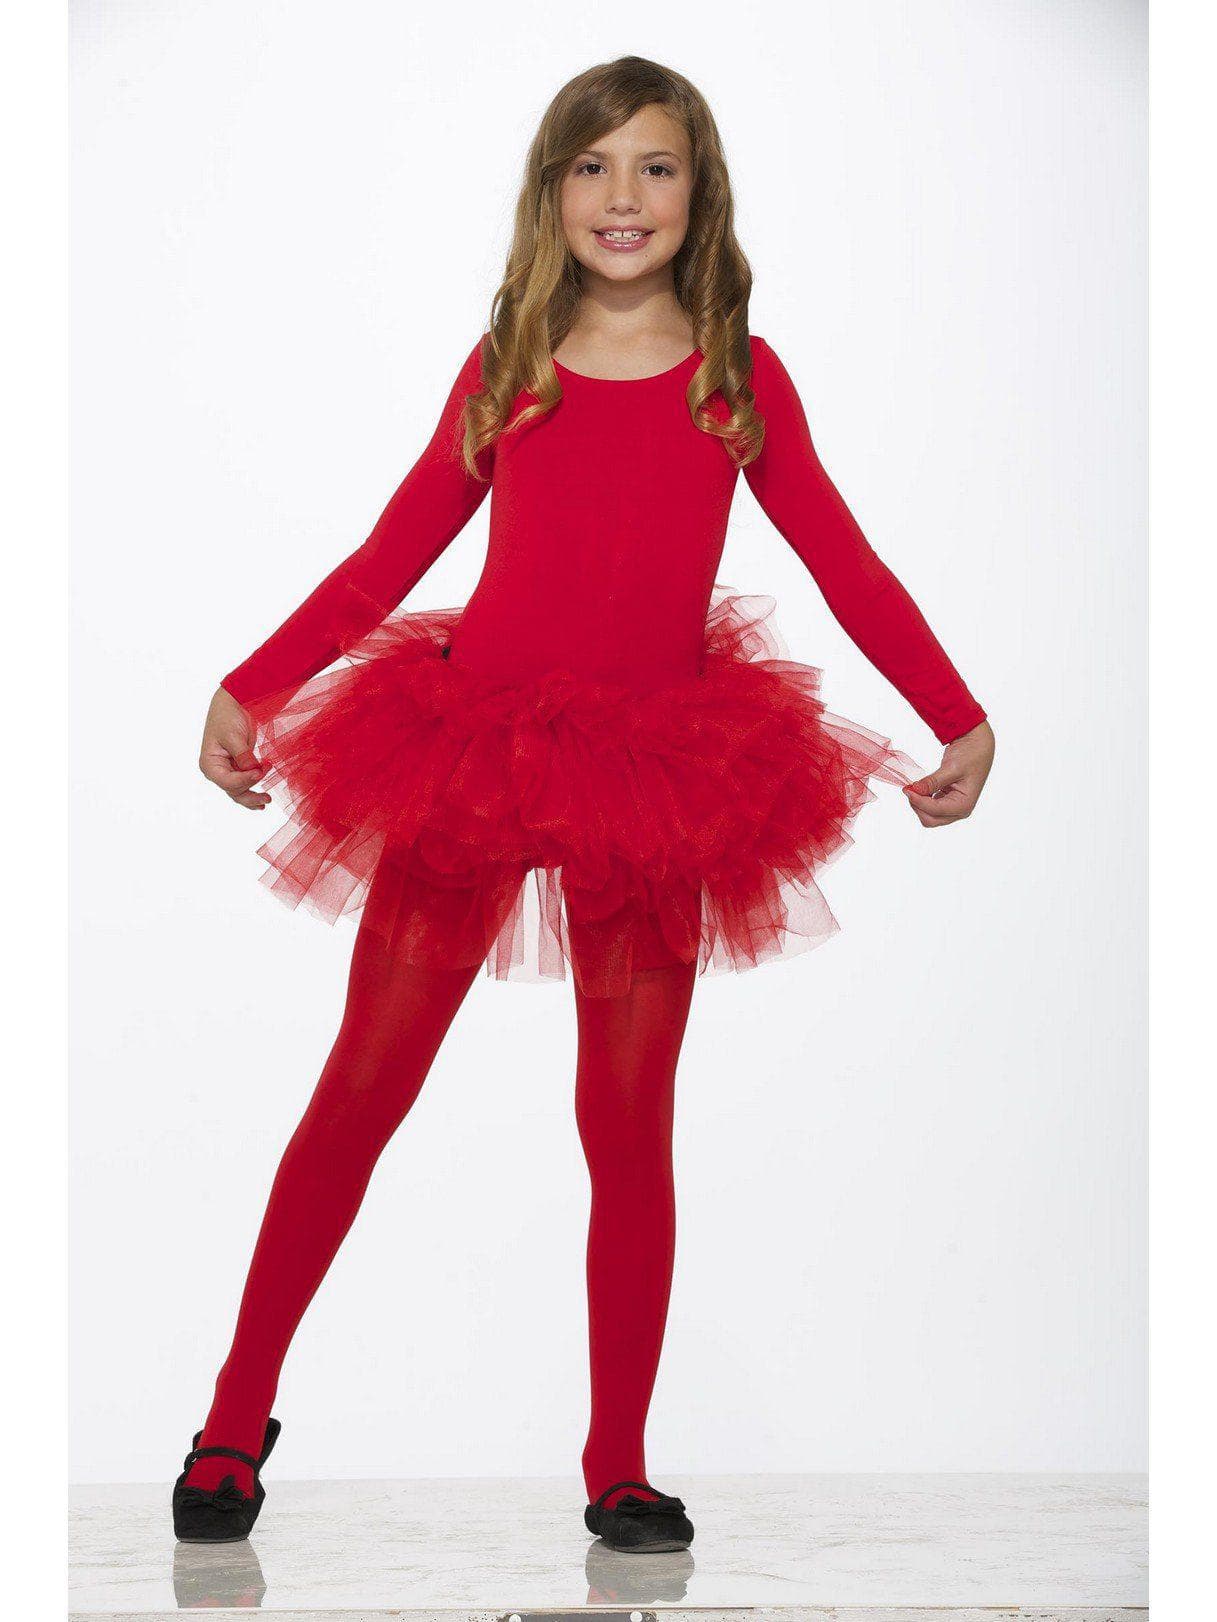 Girls' Red Tutu - costumes.com